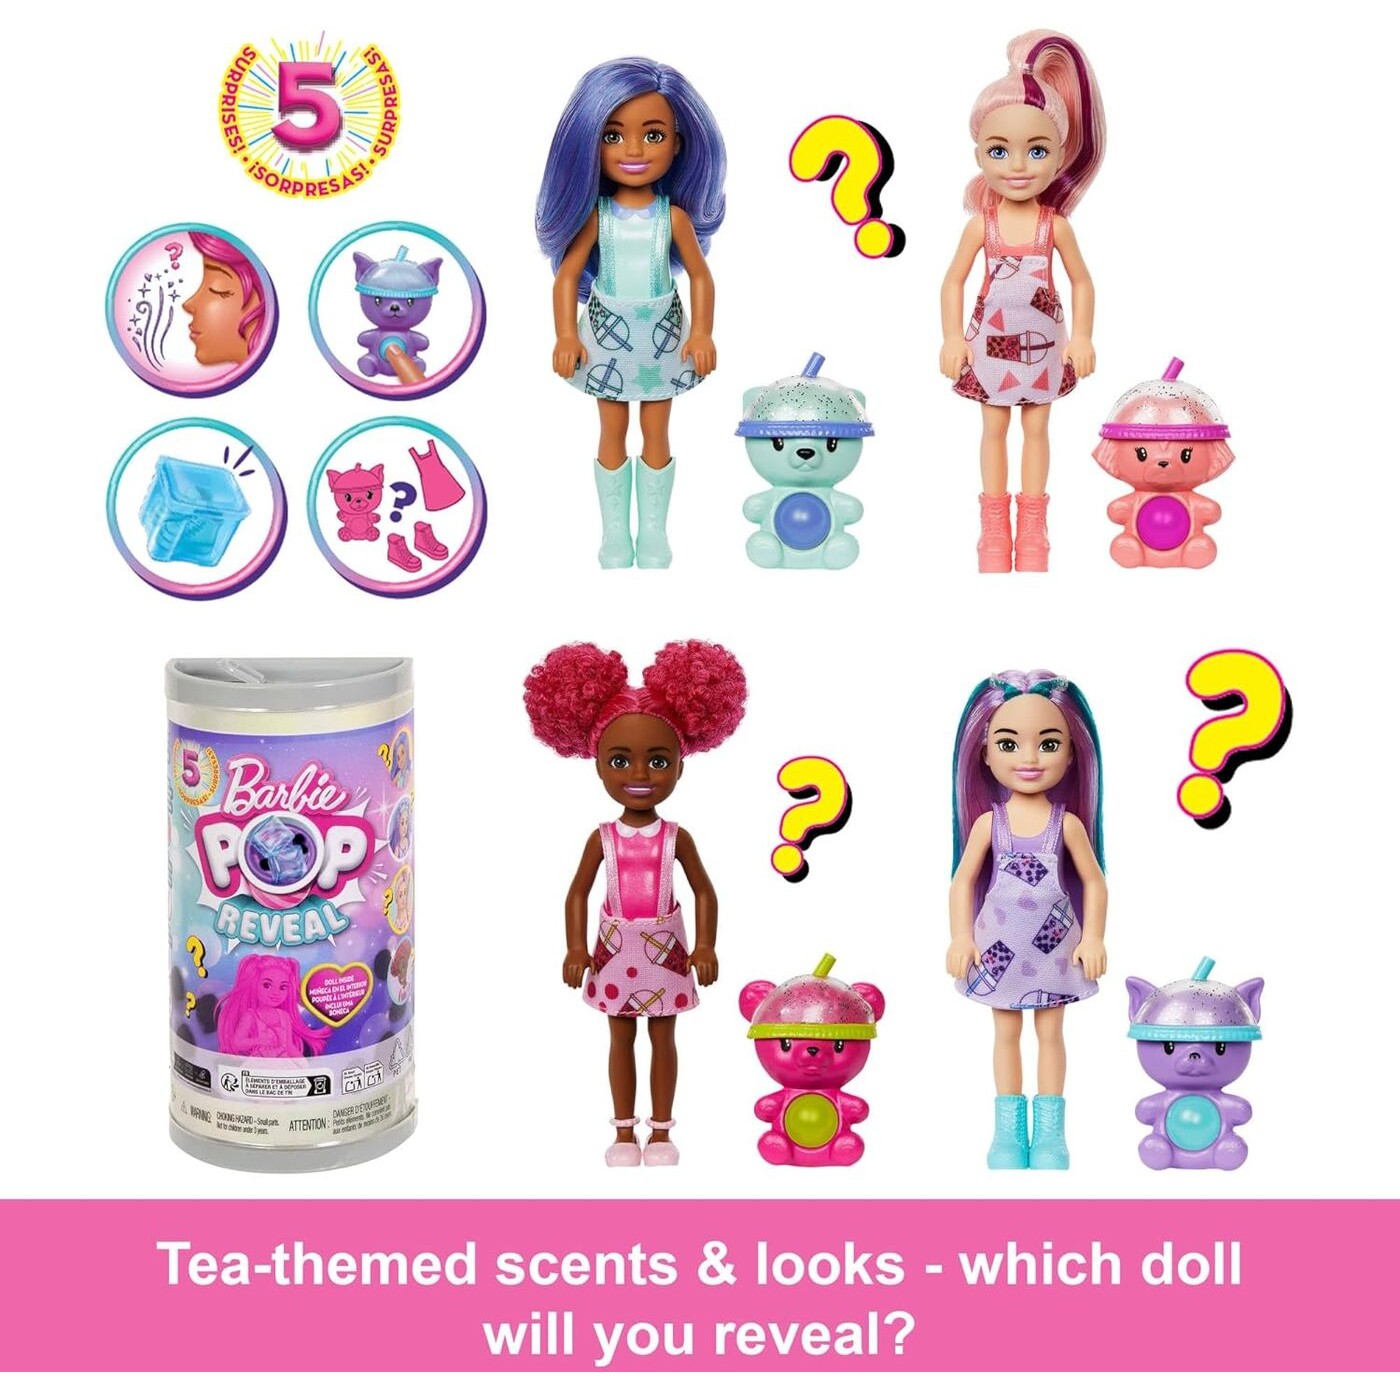 Barbie Chelsea Pop Reveal Bubble Tea Doll (HRK63)